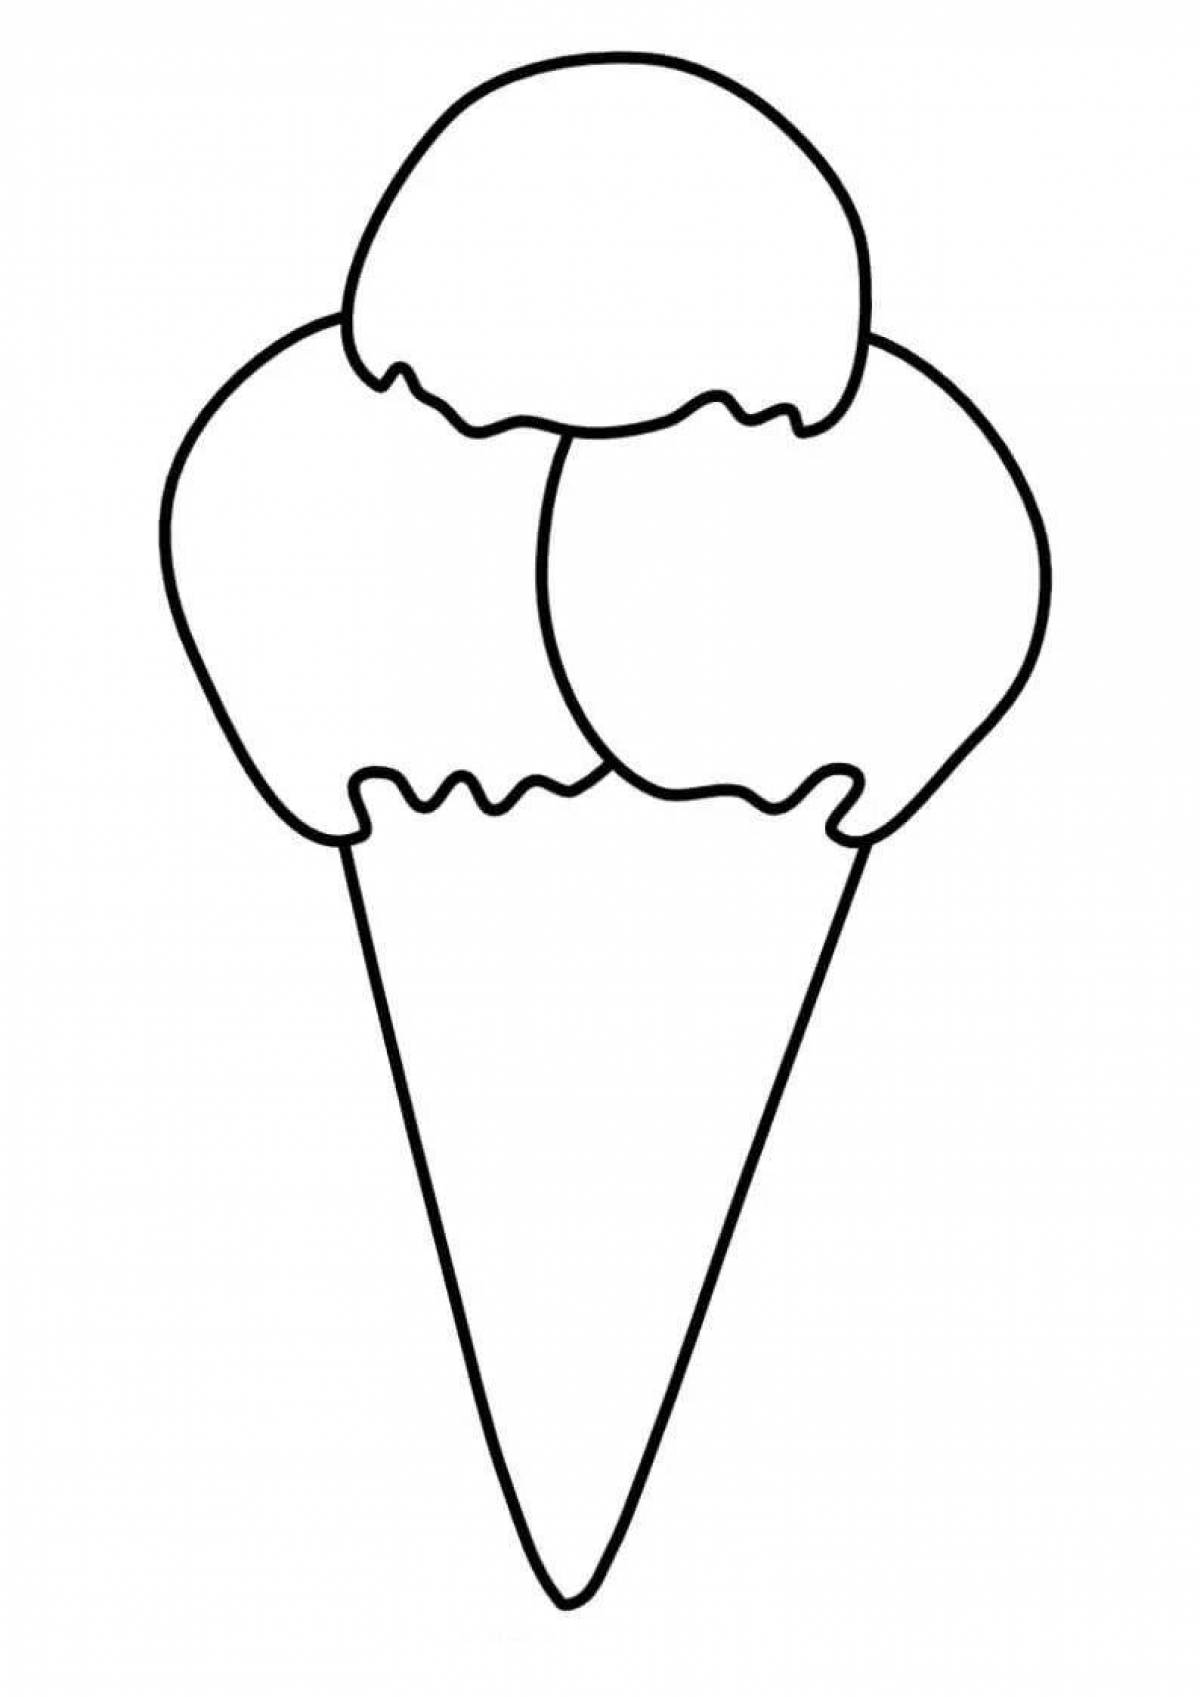 Delicious ice cream cone coloring page